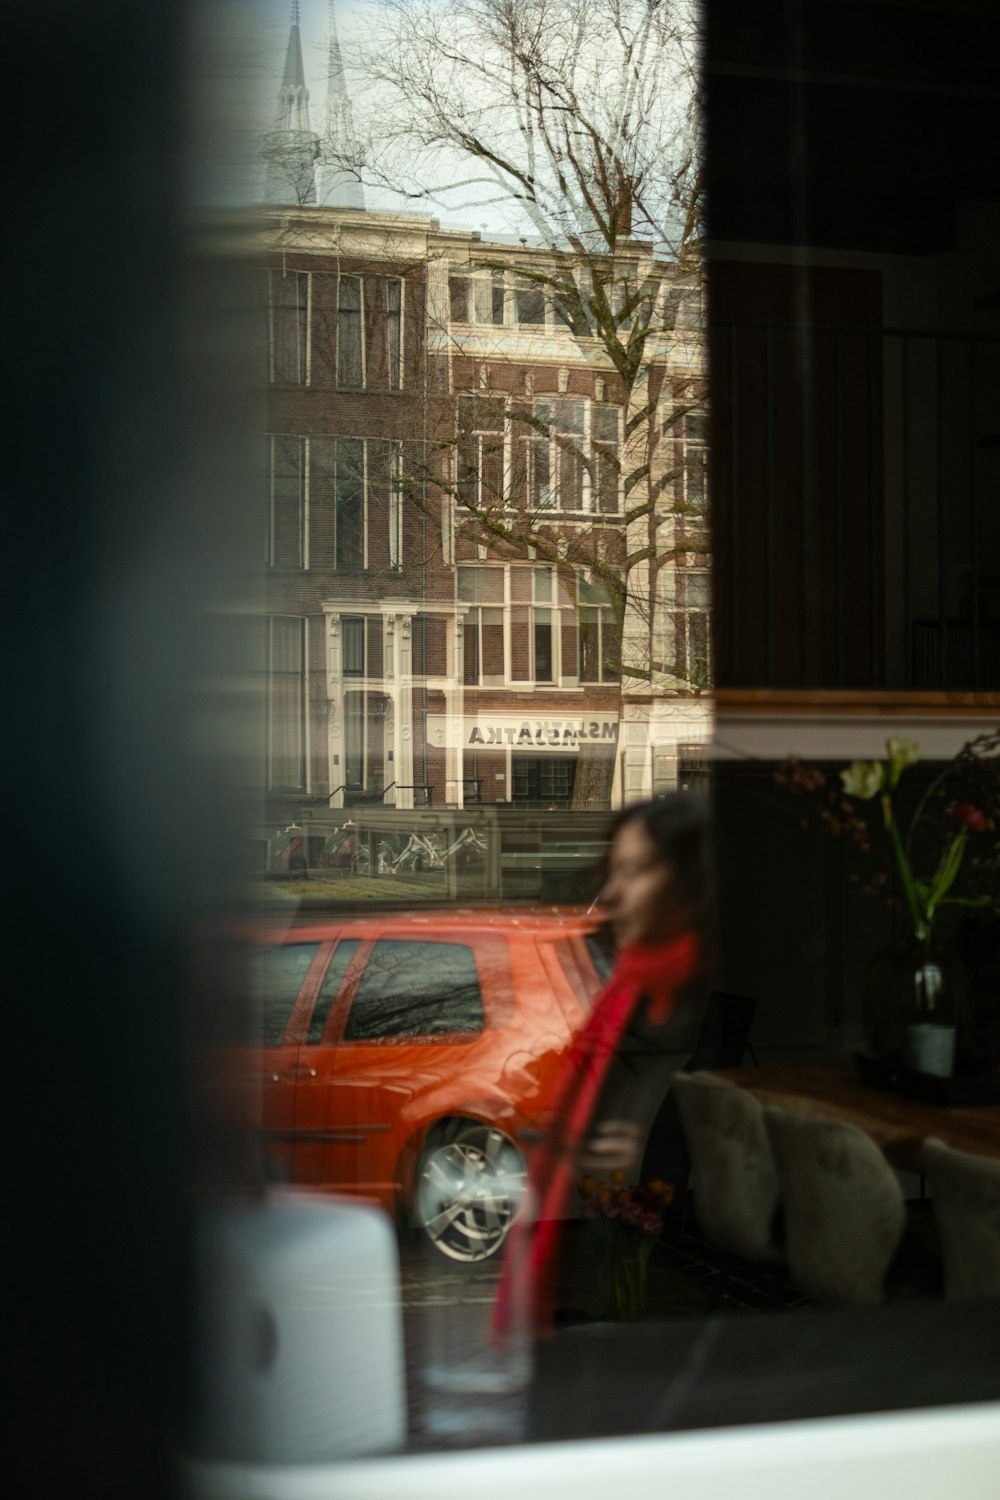 a red car is seen through a window